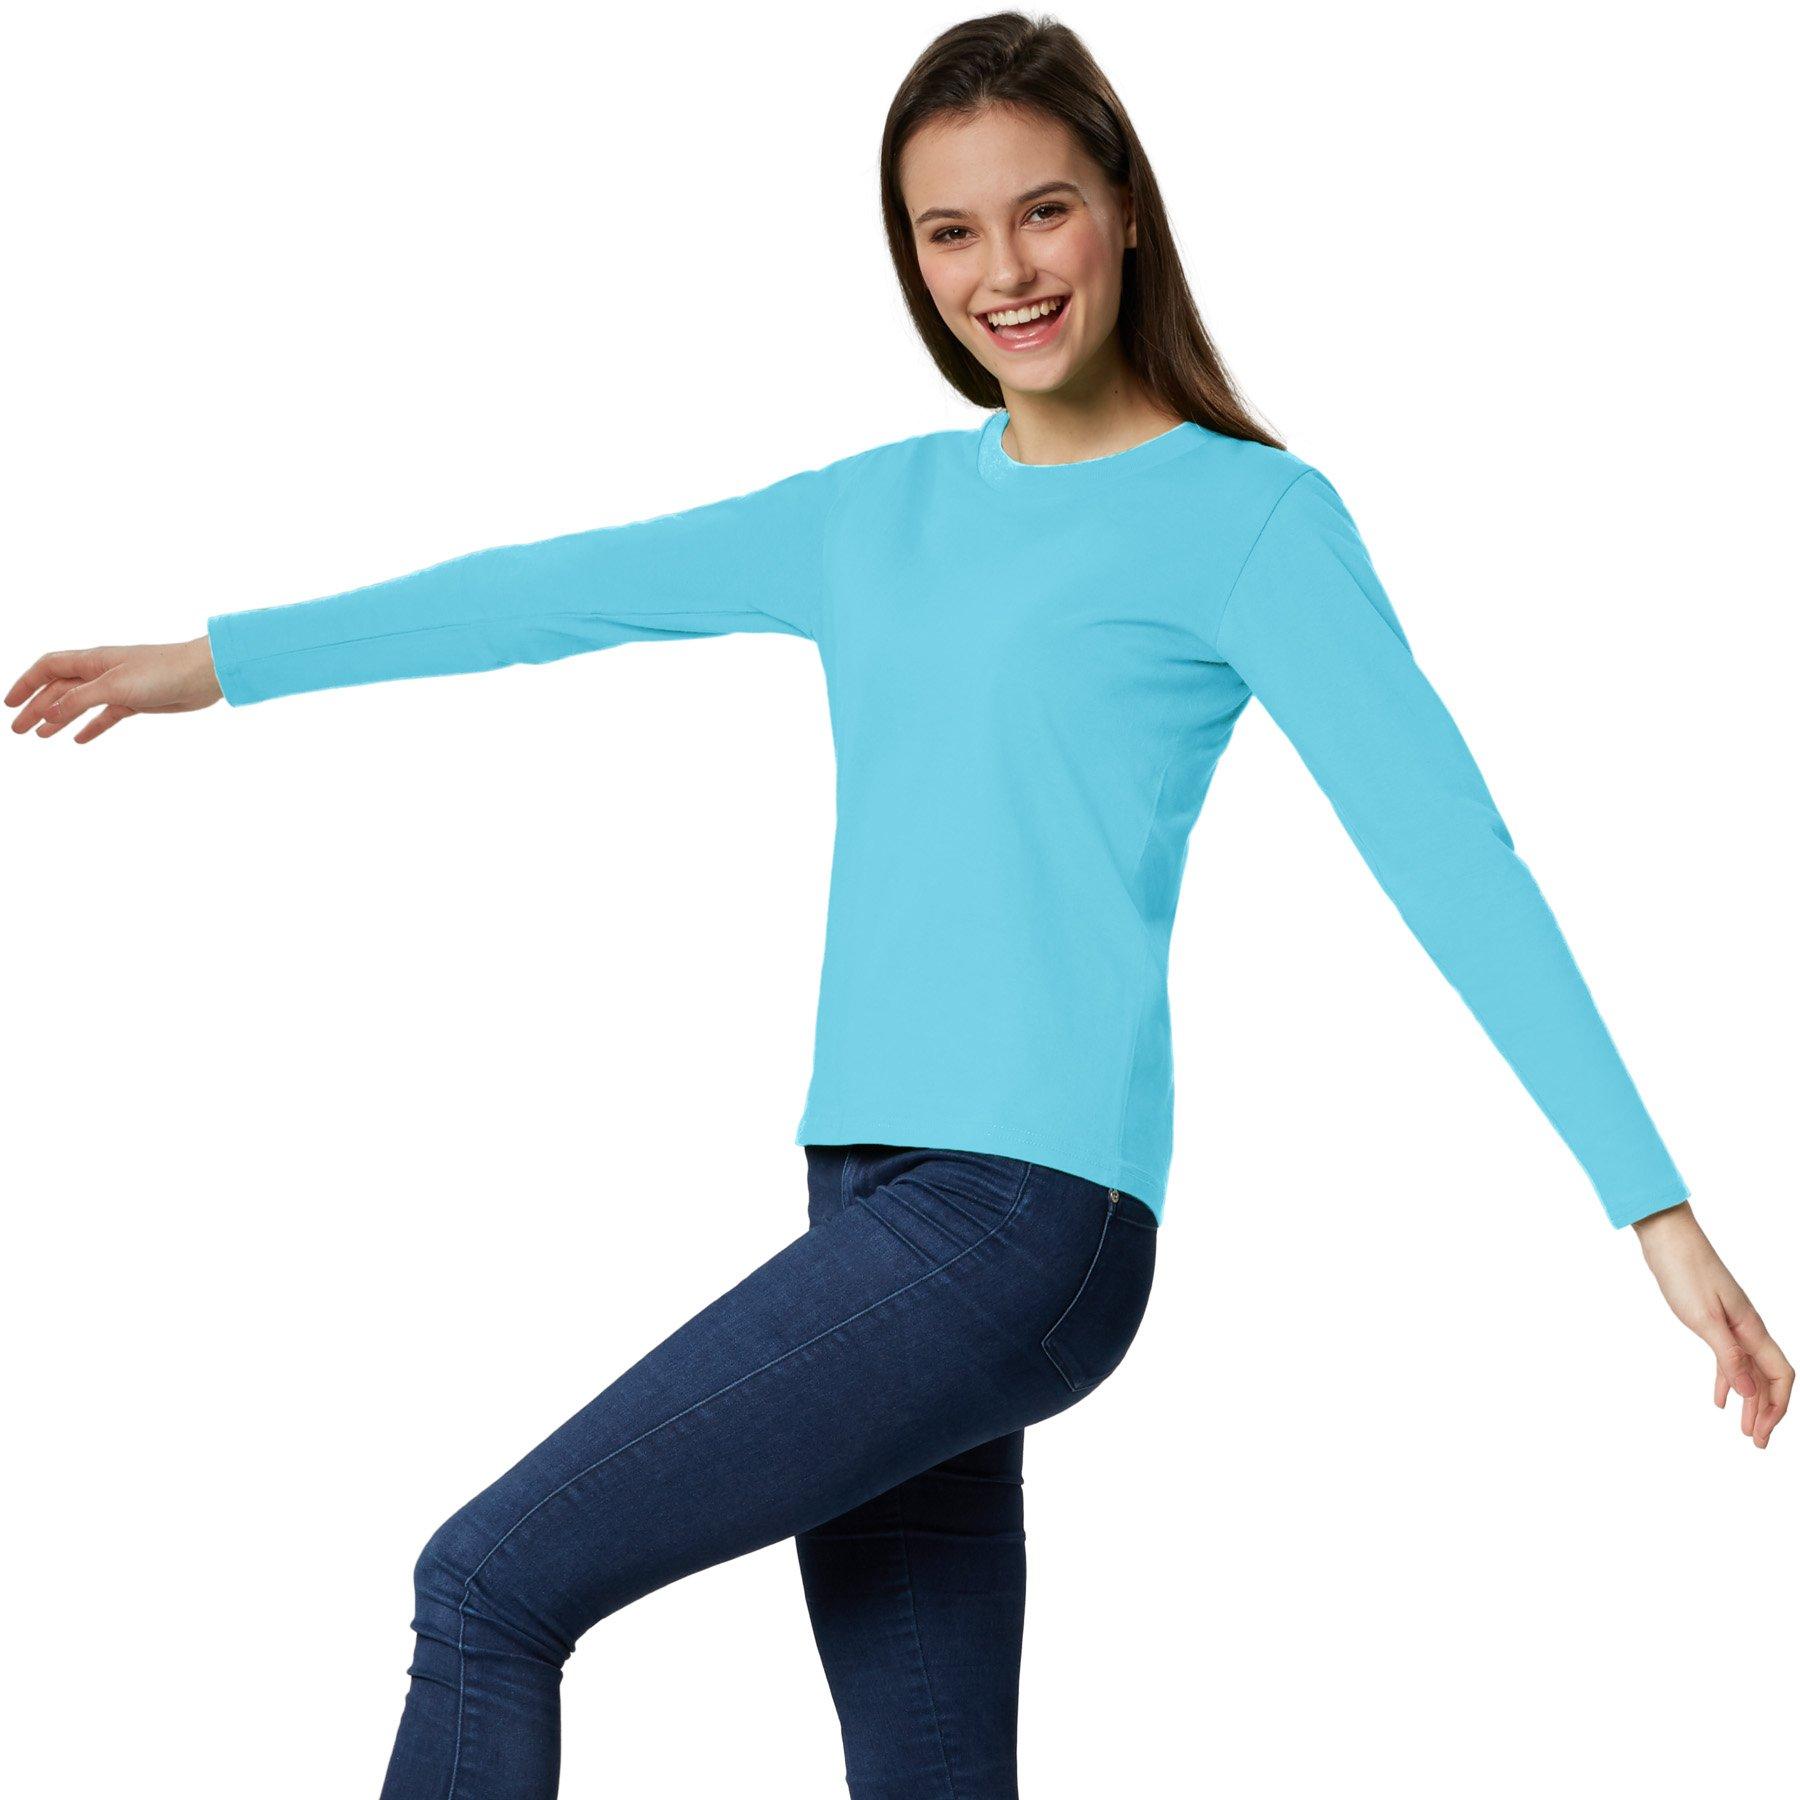 Langarm-shirt Frauen Damen Hellblau XL von Tectake